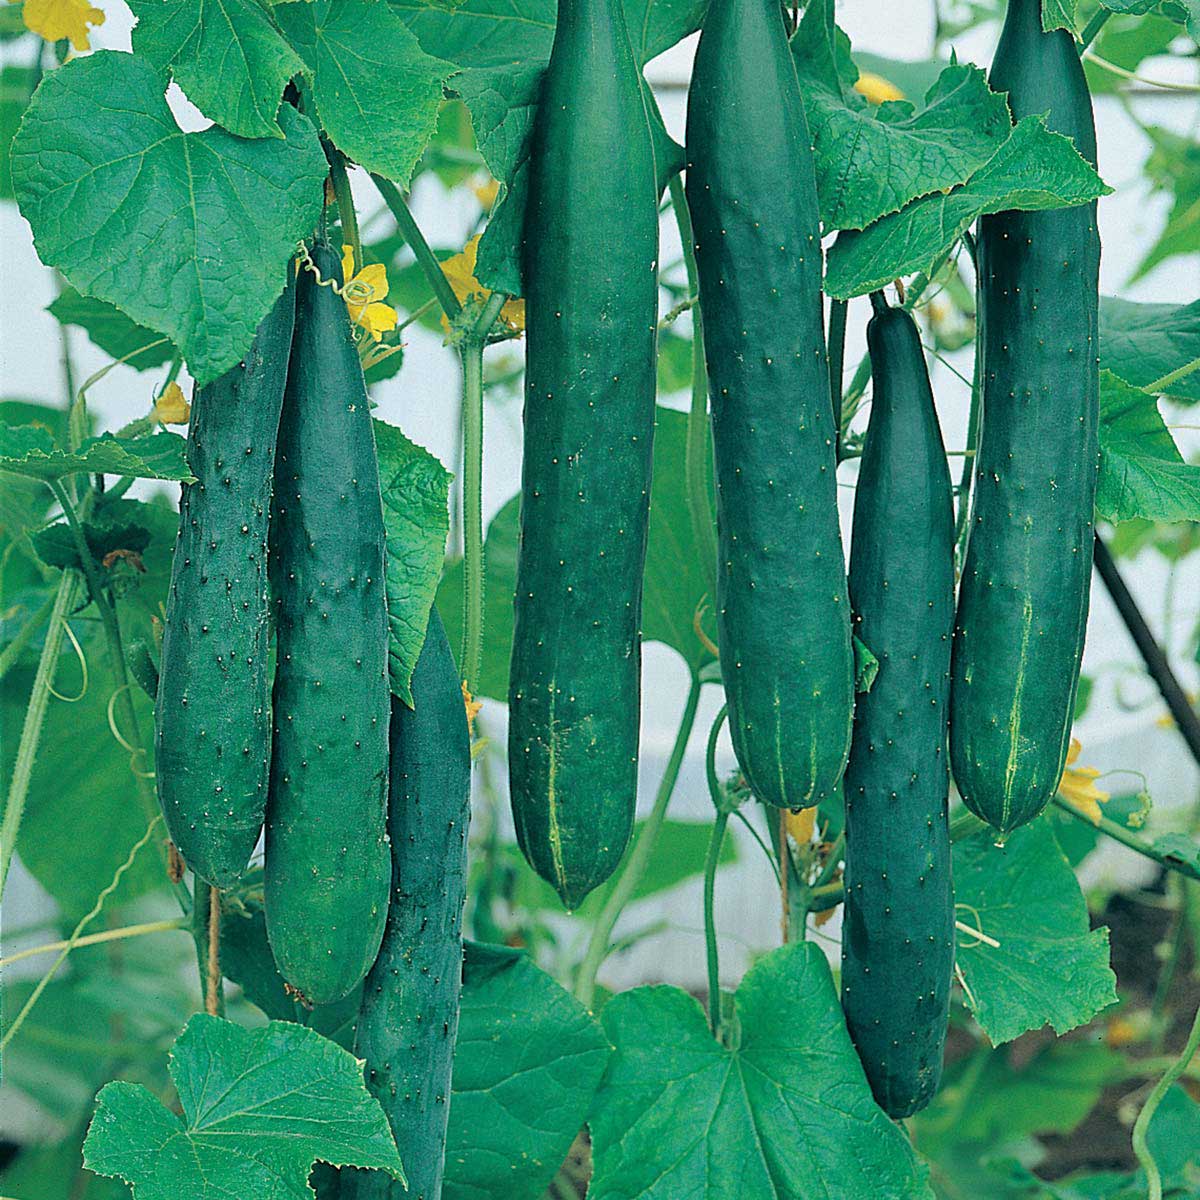 Wilko Cucumber Burpless Tasty Green F1 Seeds Image 1